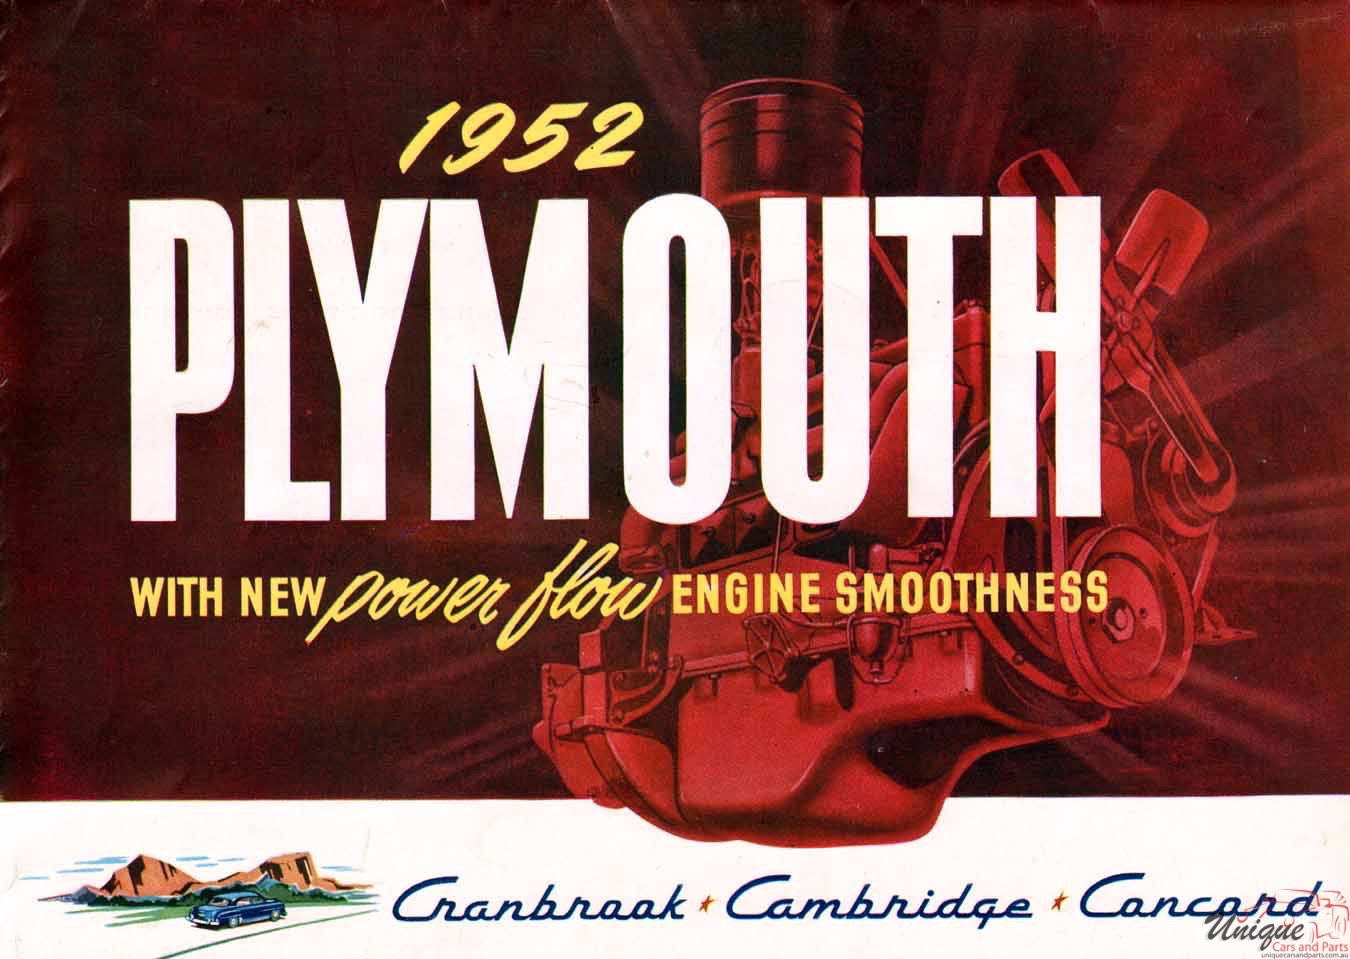 1952 Plymouth Foldout